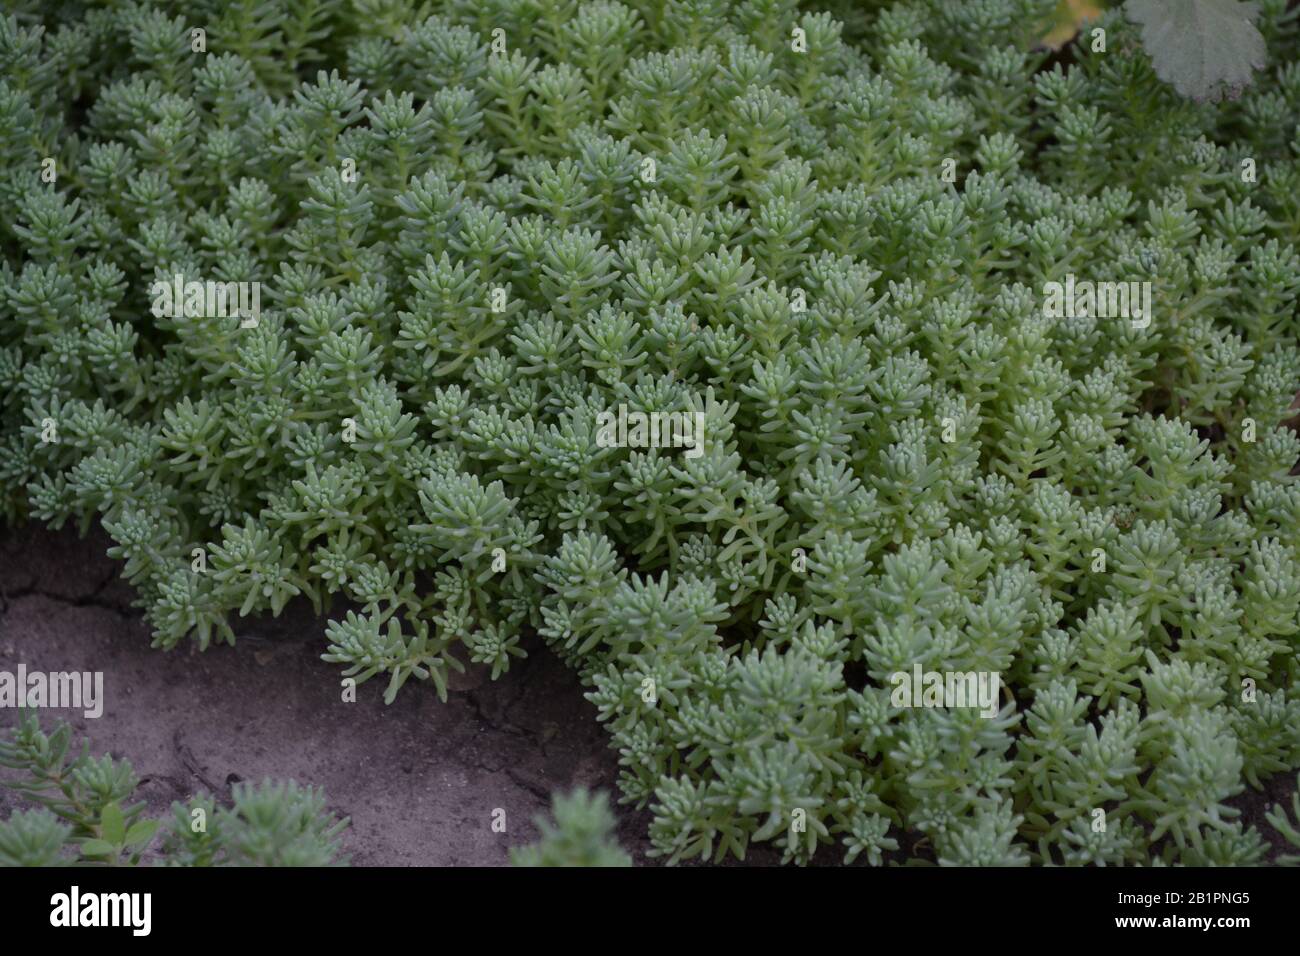 Stonecrop. Hare cabbage. Sedum. Green moss. Decorative grassy carpet. Green flower bed decoration. Garden beautiful. Horizontal Stock Photo